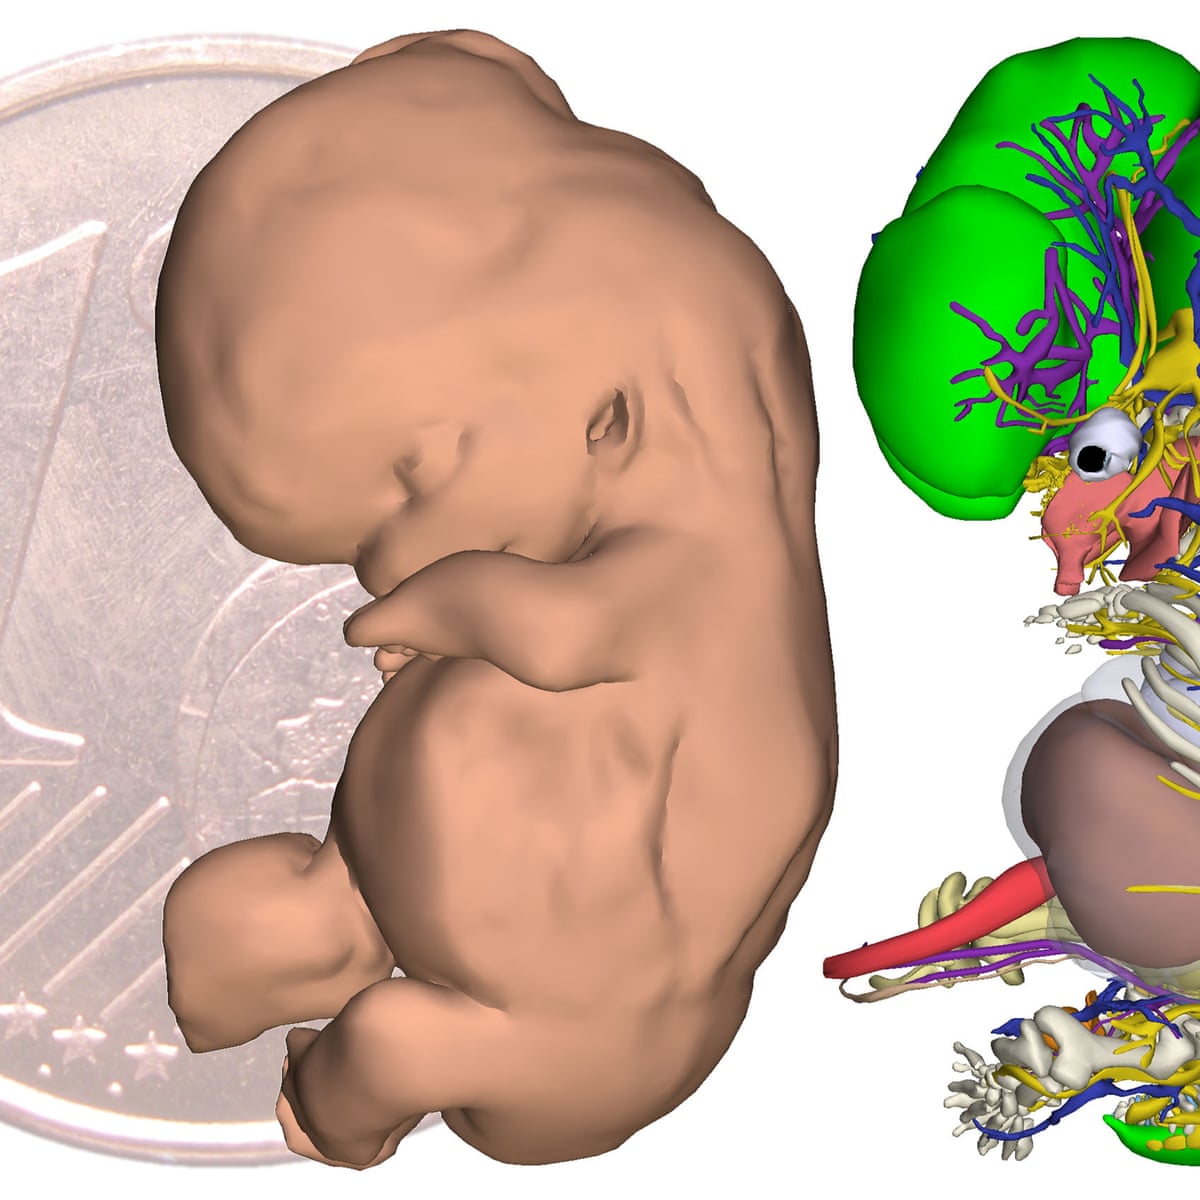 3D embryo atlas reveals human development in unprecedented detail | Human  biology | The Guardian